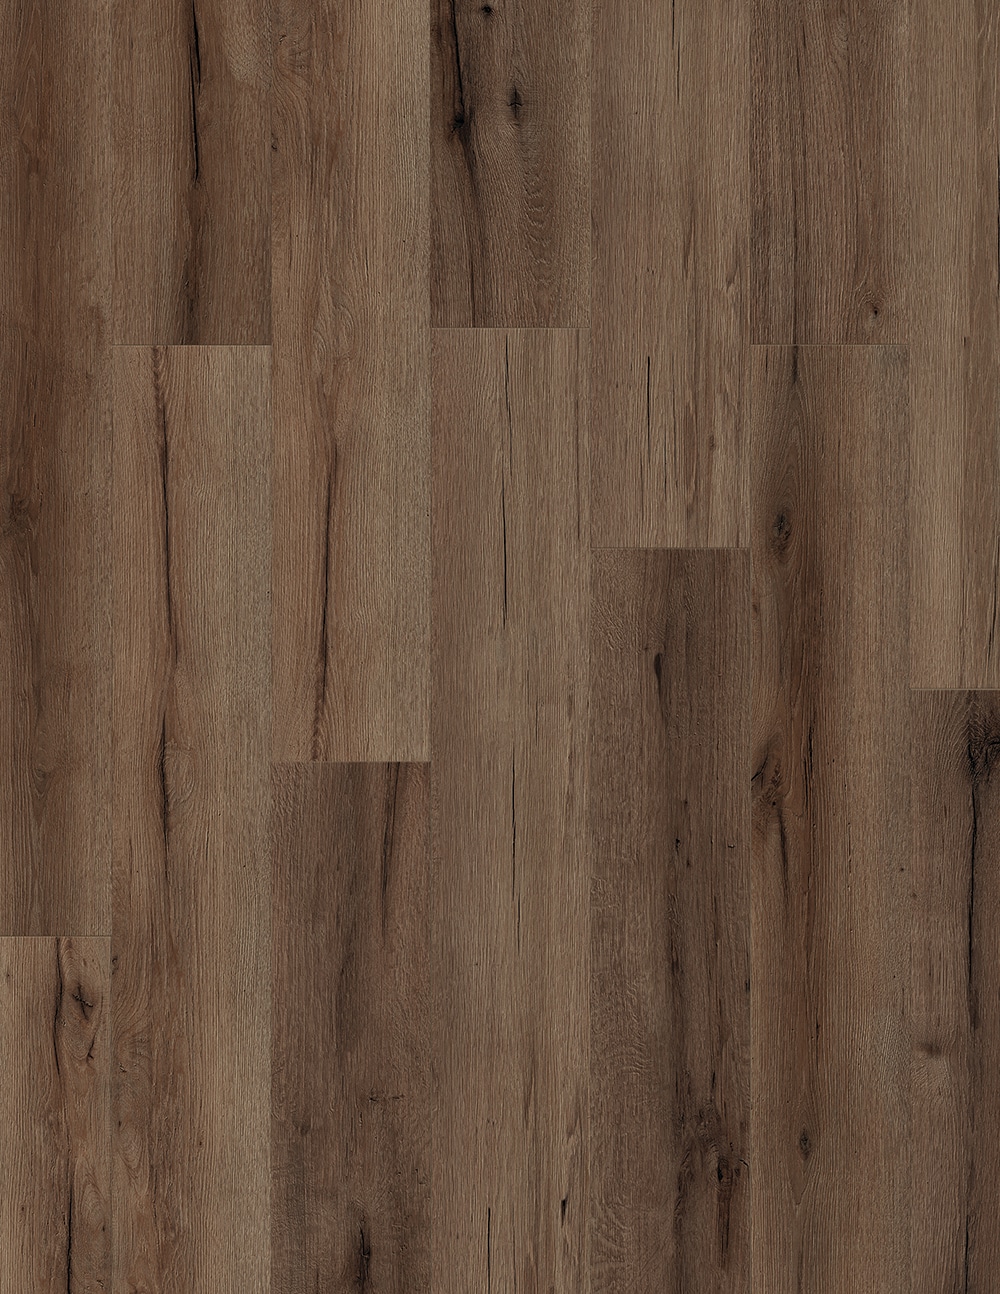 (Sample) Allen+Roth French Oak Brown Laminate Flooring | - allen + roth 53510